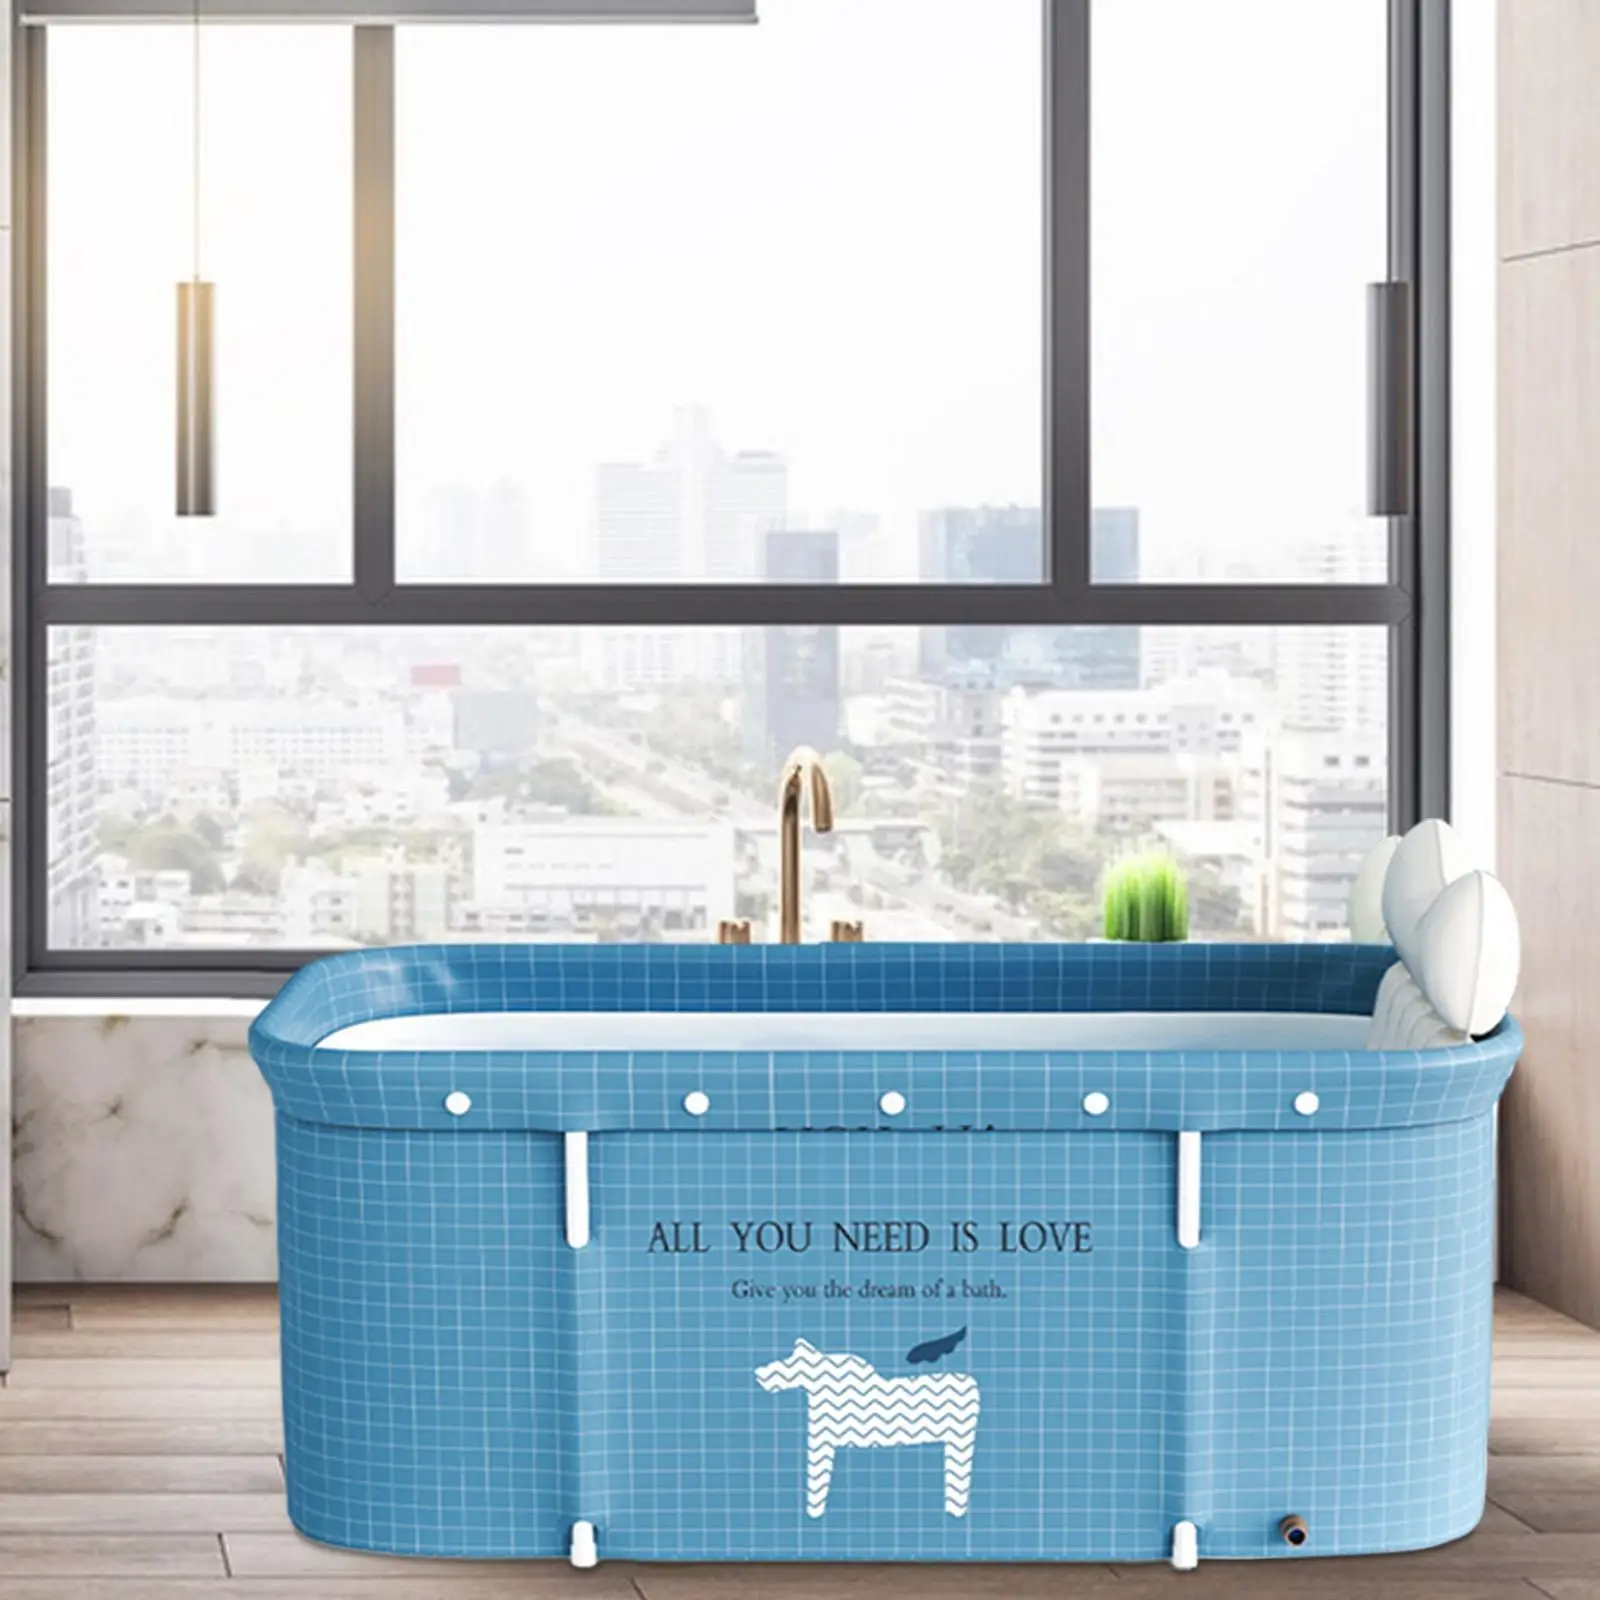 Bathroom Tub Comfort Cushion Maintenance Temperature Foldable Bathtub Hot Tub for Spa Bath Shower Stall Small Outdoor Indoor